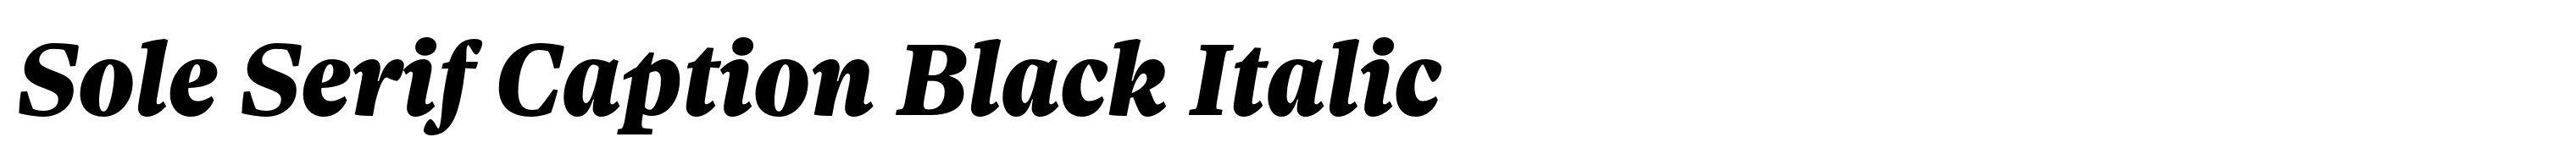 Sole Serif Caption Black Italic